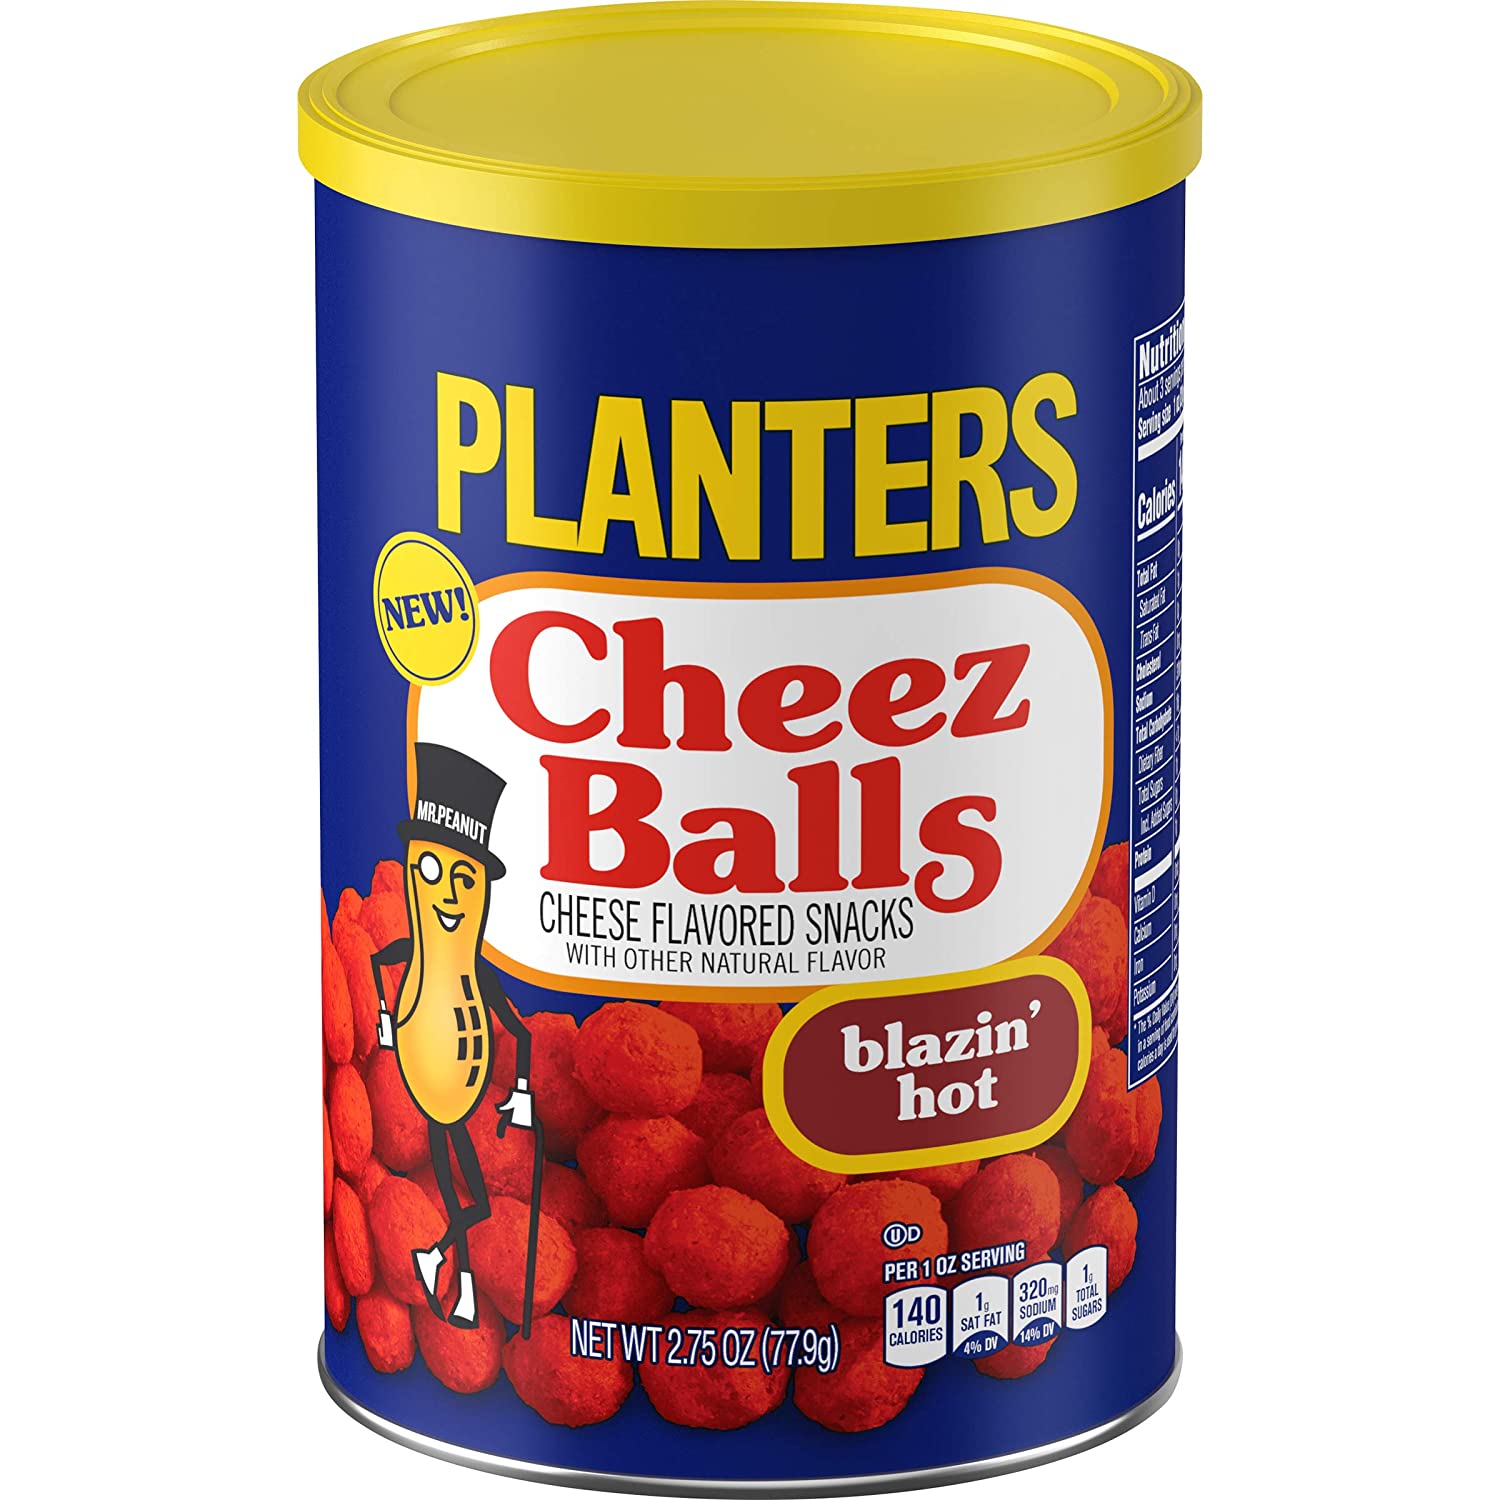 Planters Cheez Balls Blazin’ Hot - 78g - New (Blazin’ Hot)